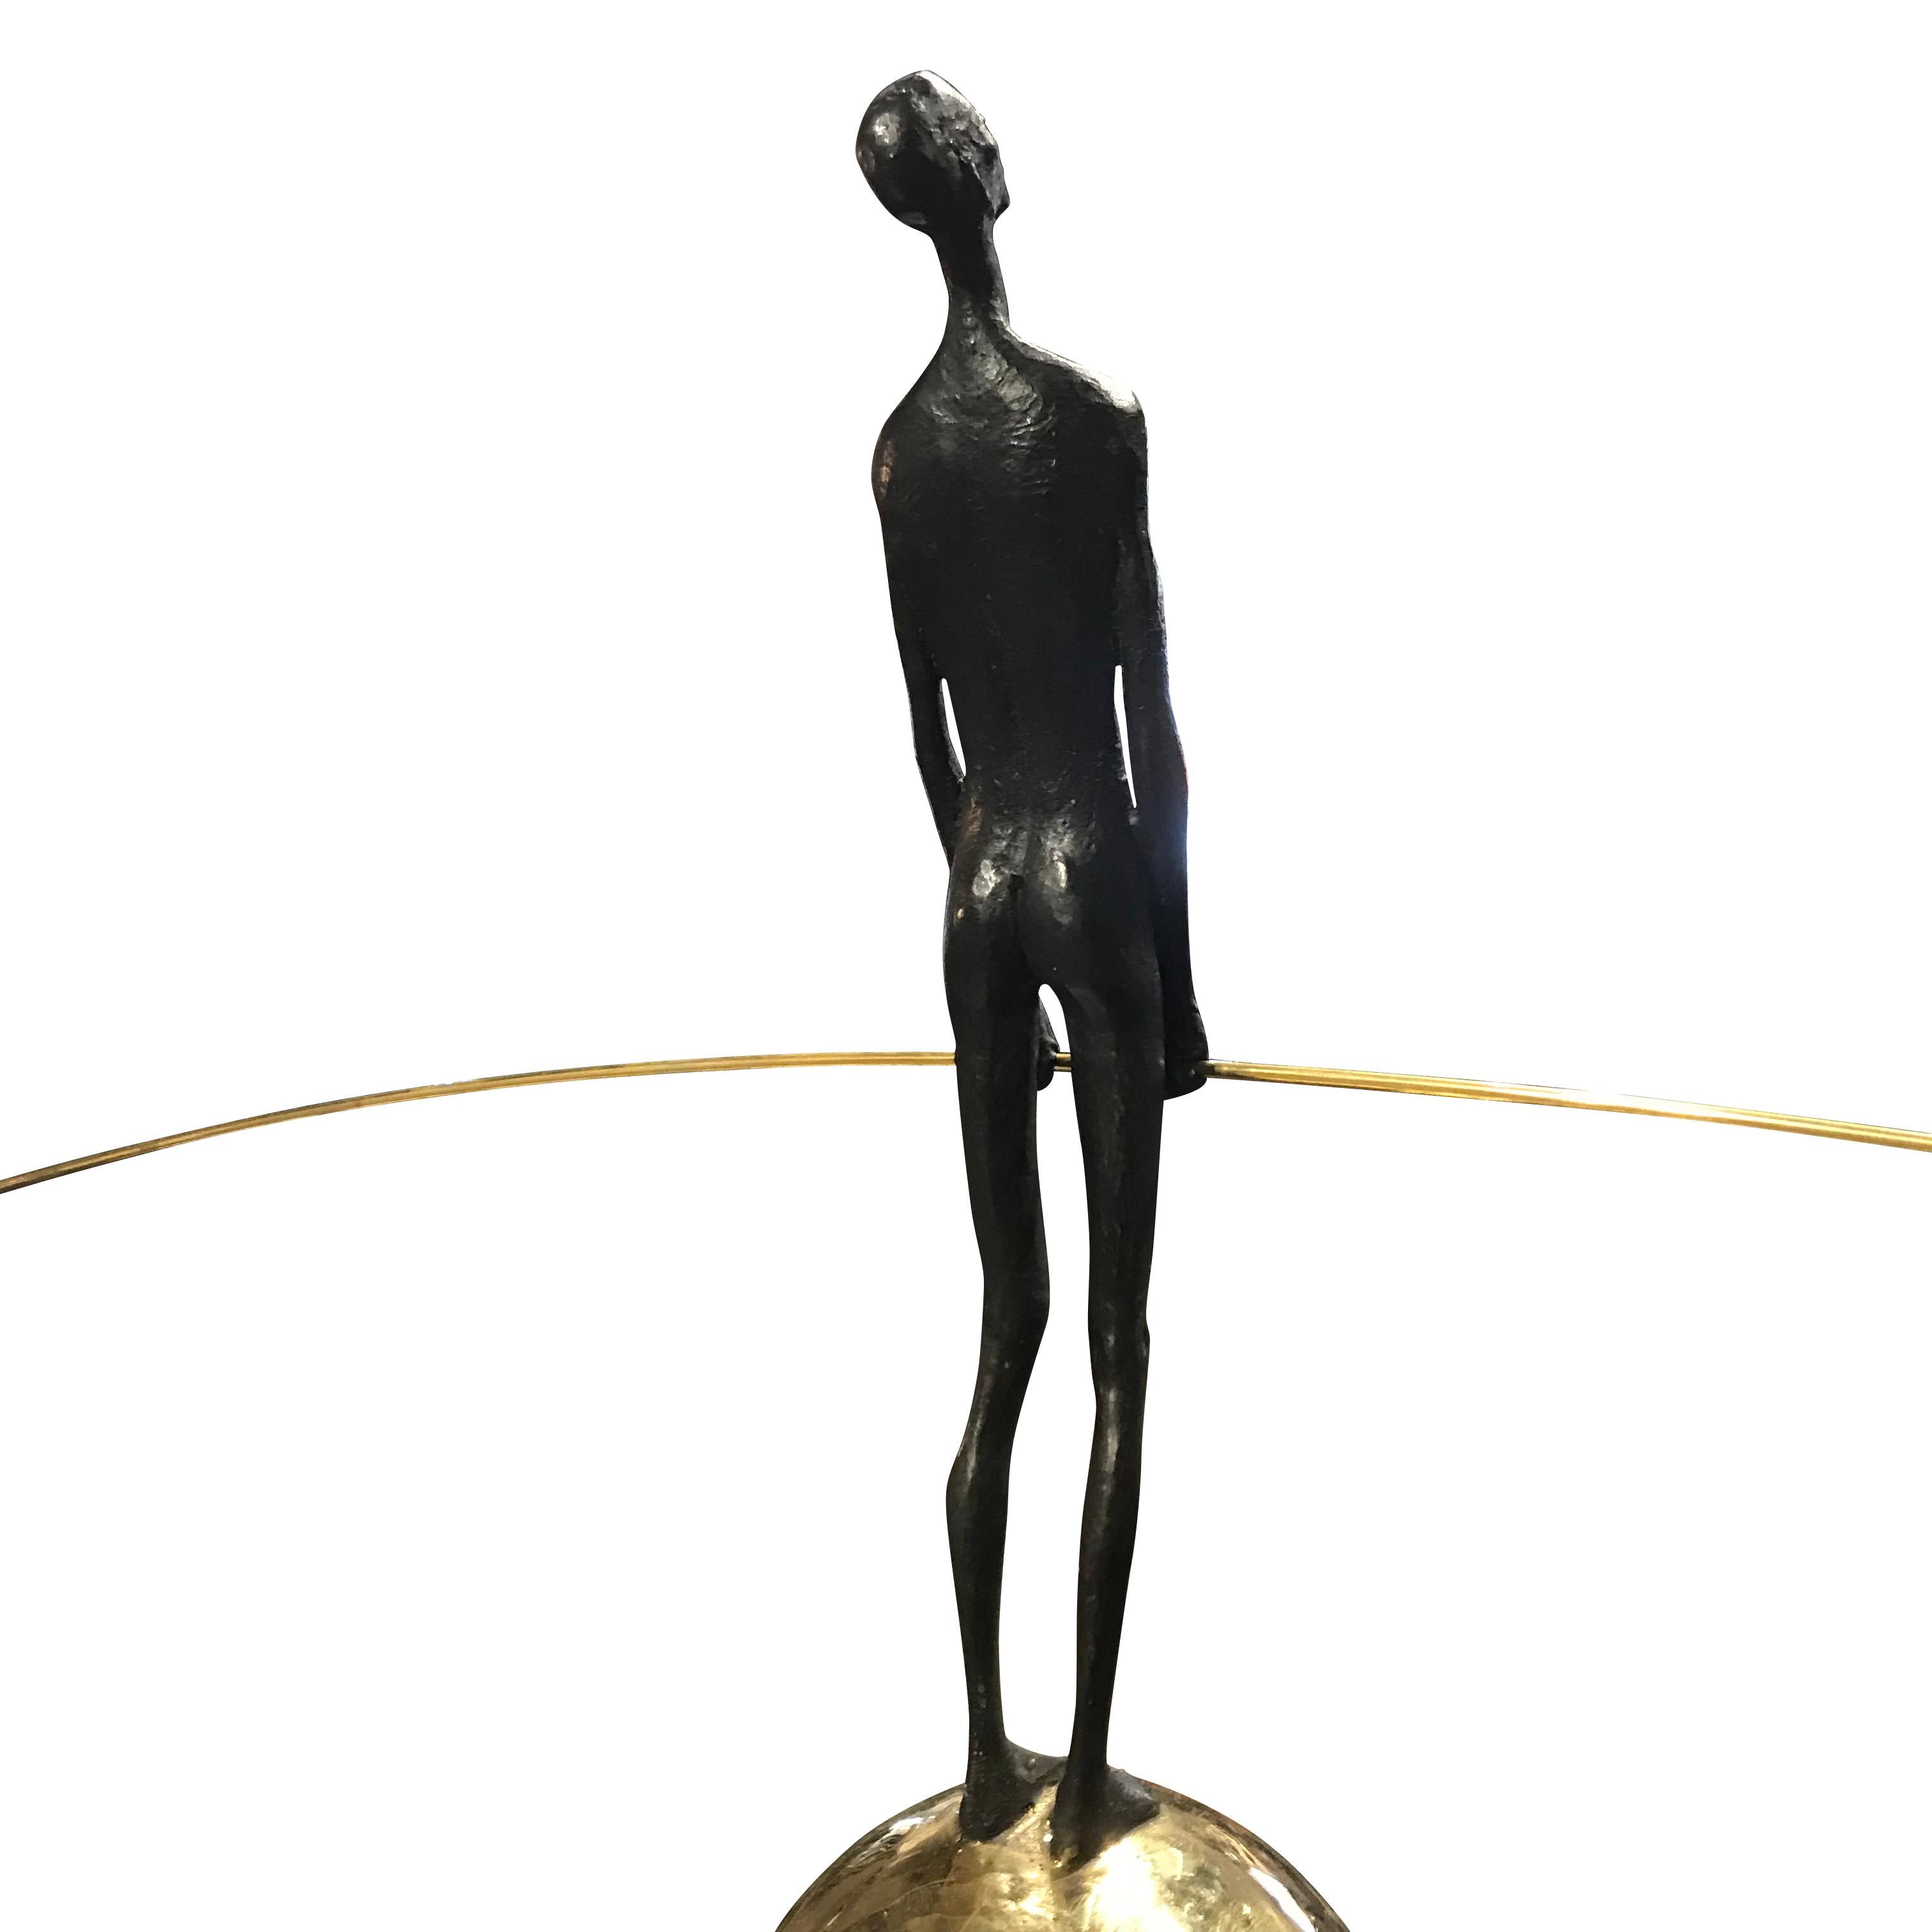 Contemporary German bronze acrobat standing on bronze ball mounted on wood pedestal
Statue stands on wood pedestal
Pedestal measures 6.5